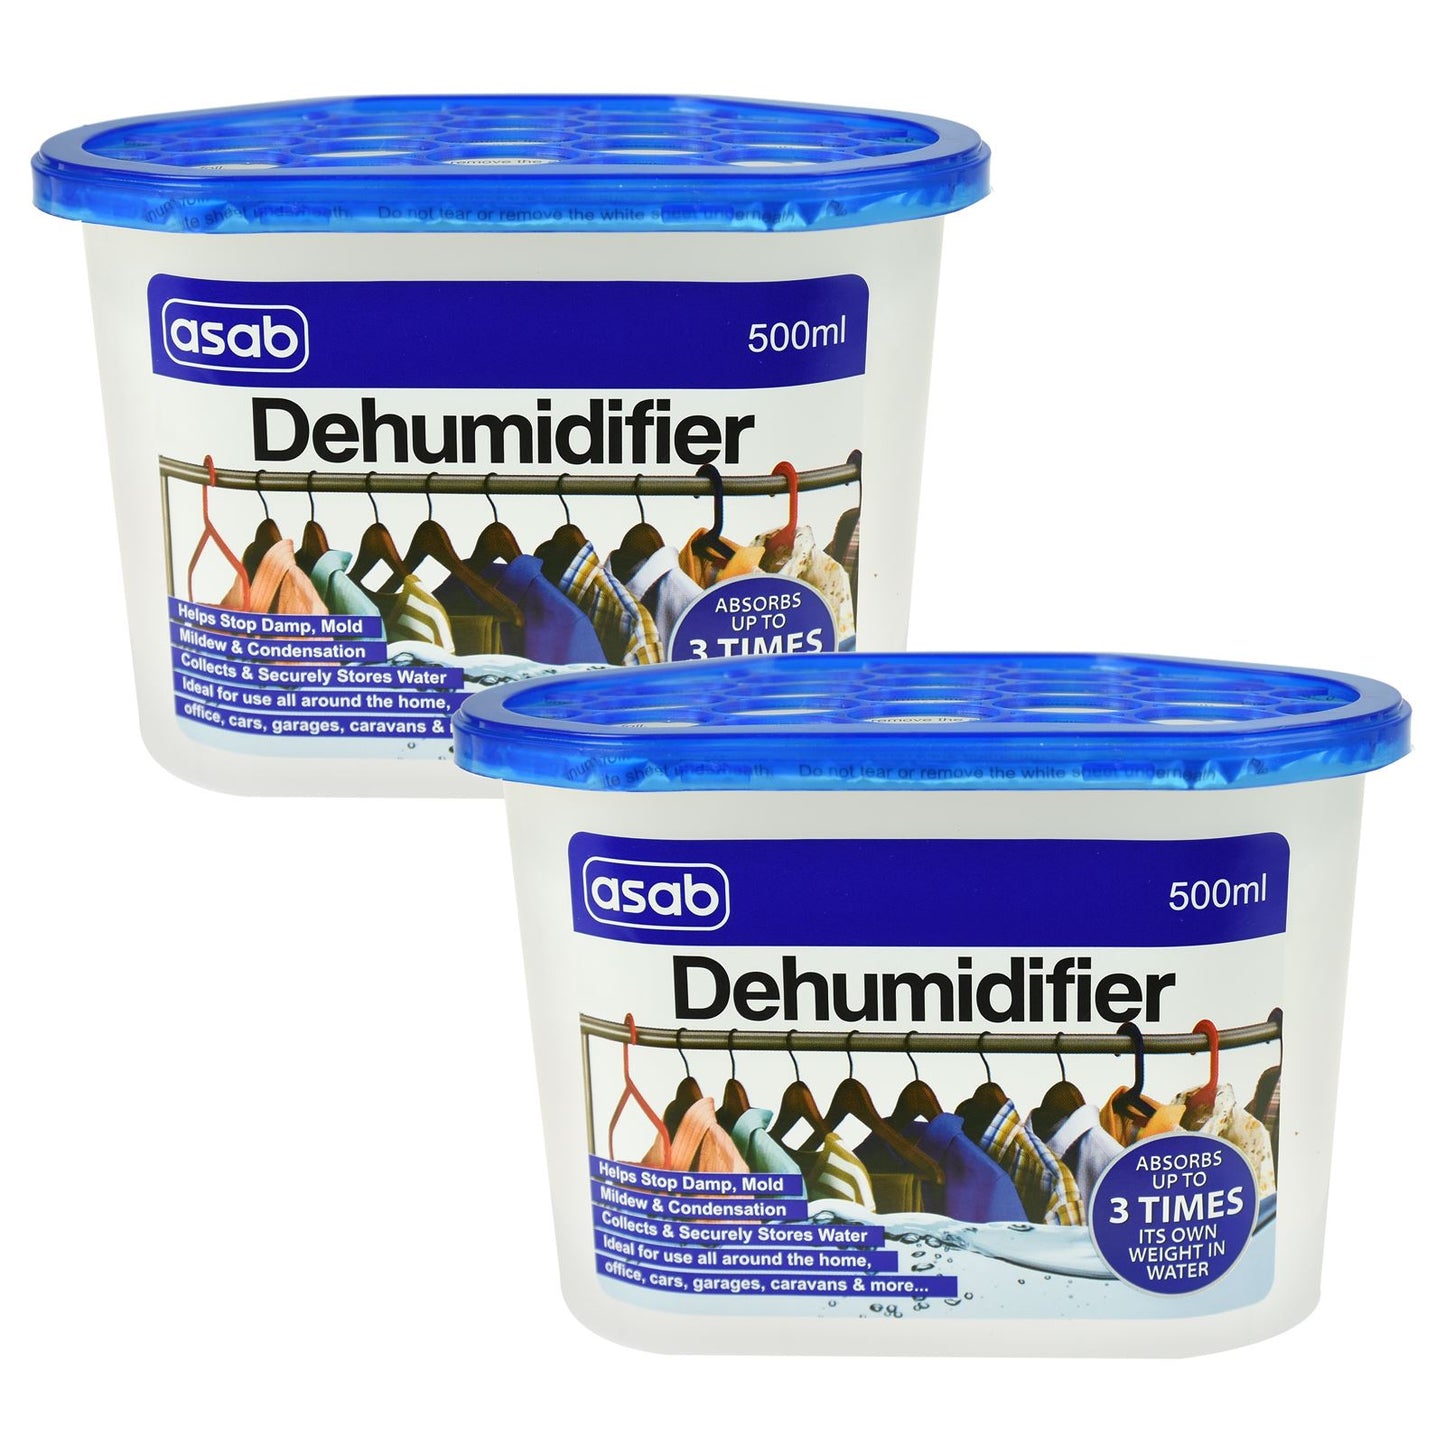 Powerful Dehumidifier for a Healthy Home